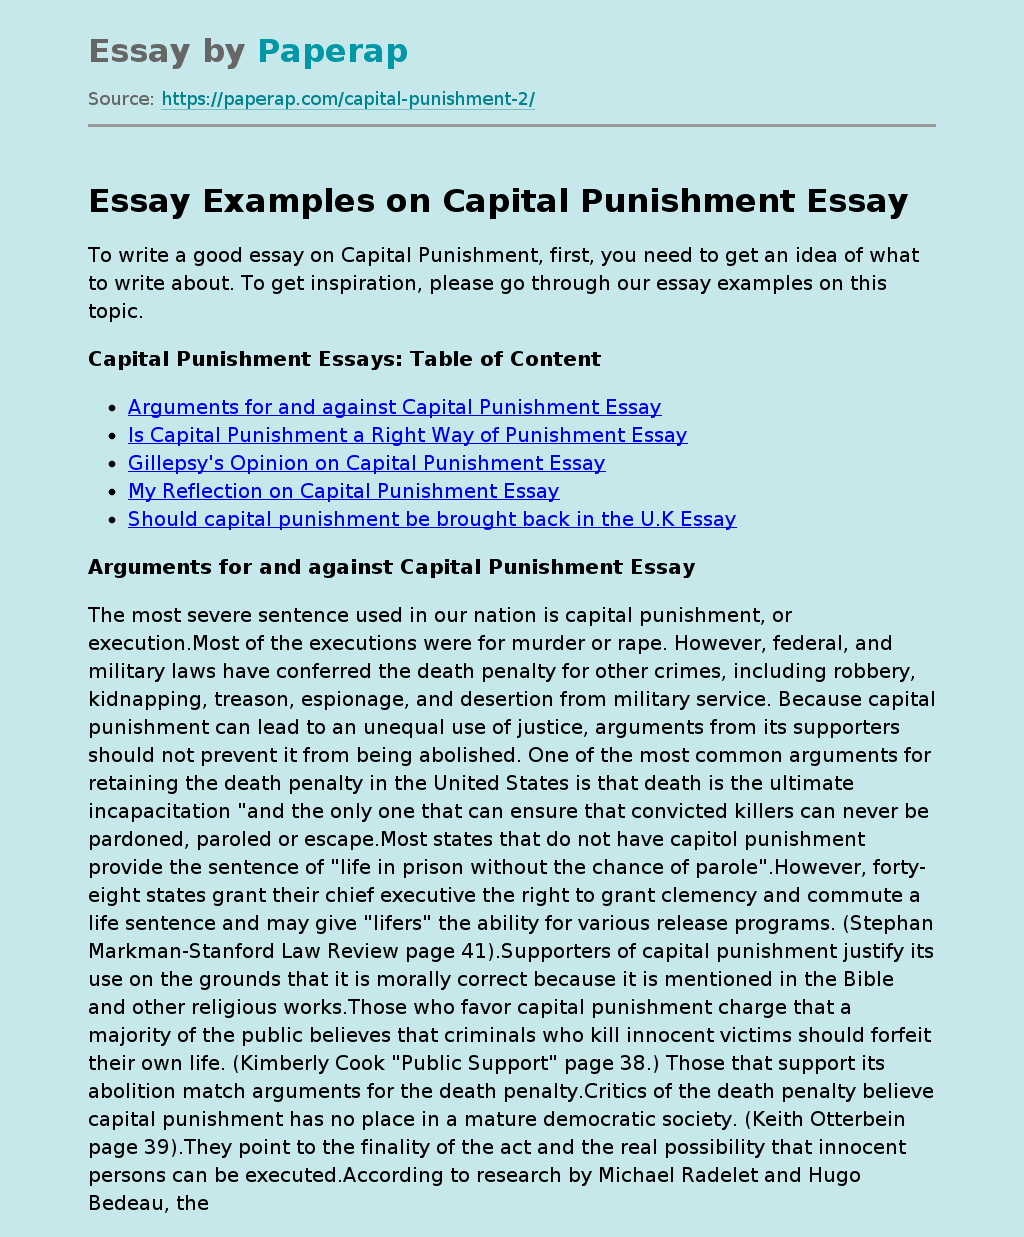 gp essay on capital punishment